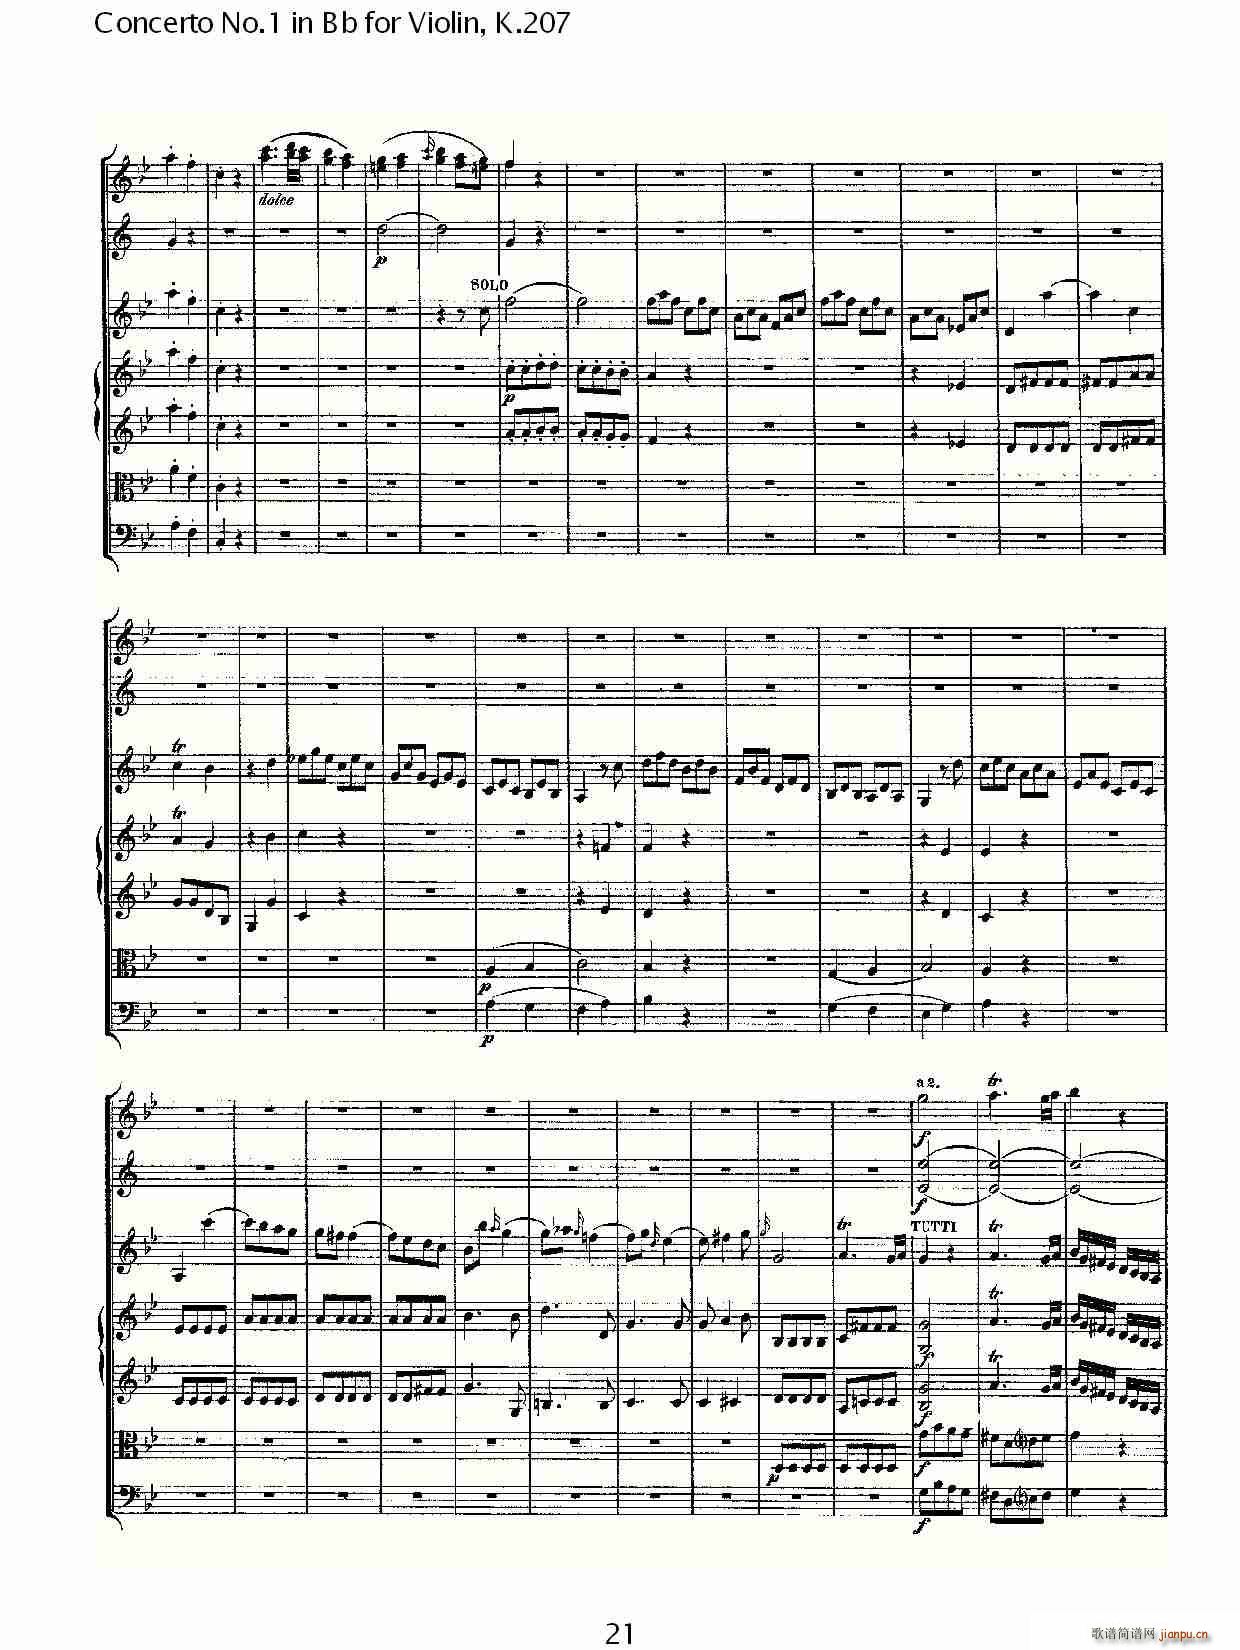 Concerto No.1 in Bb for Violin, K.207(С)21